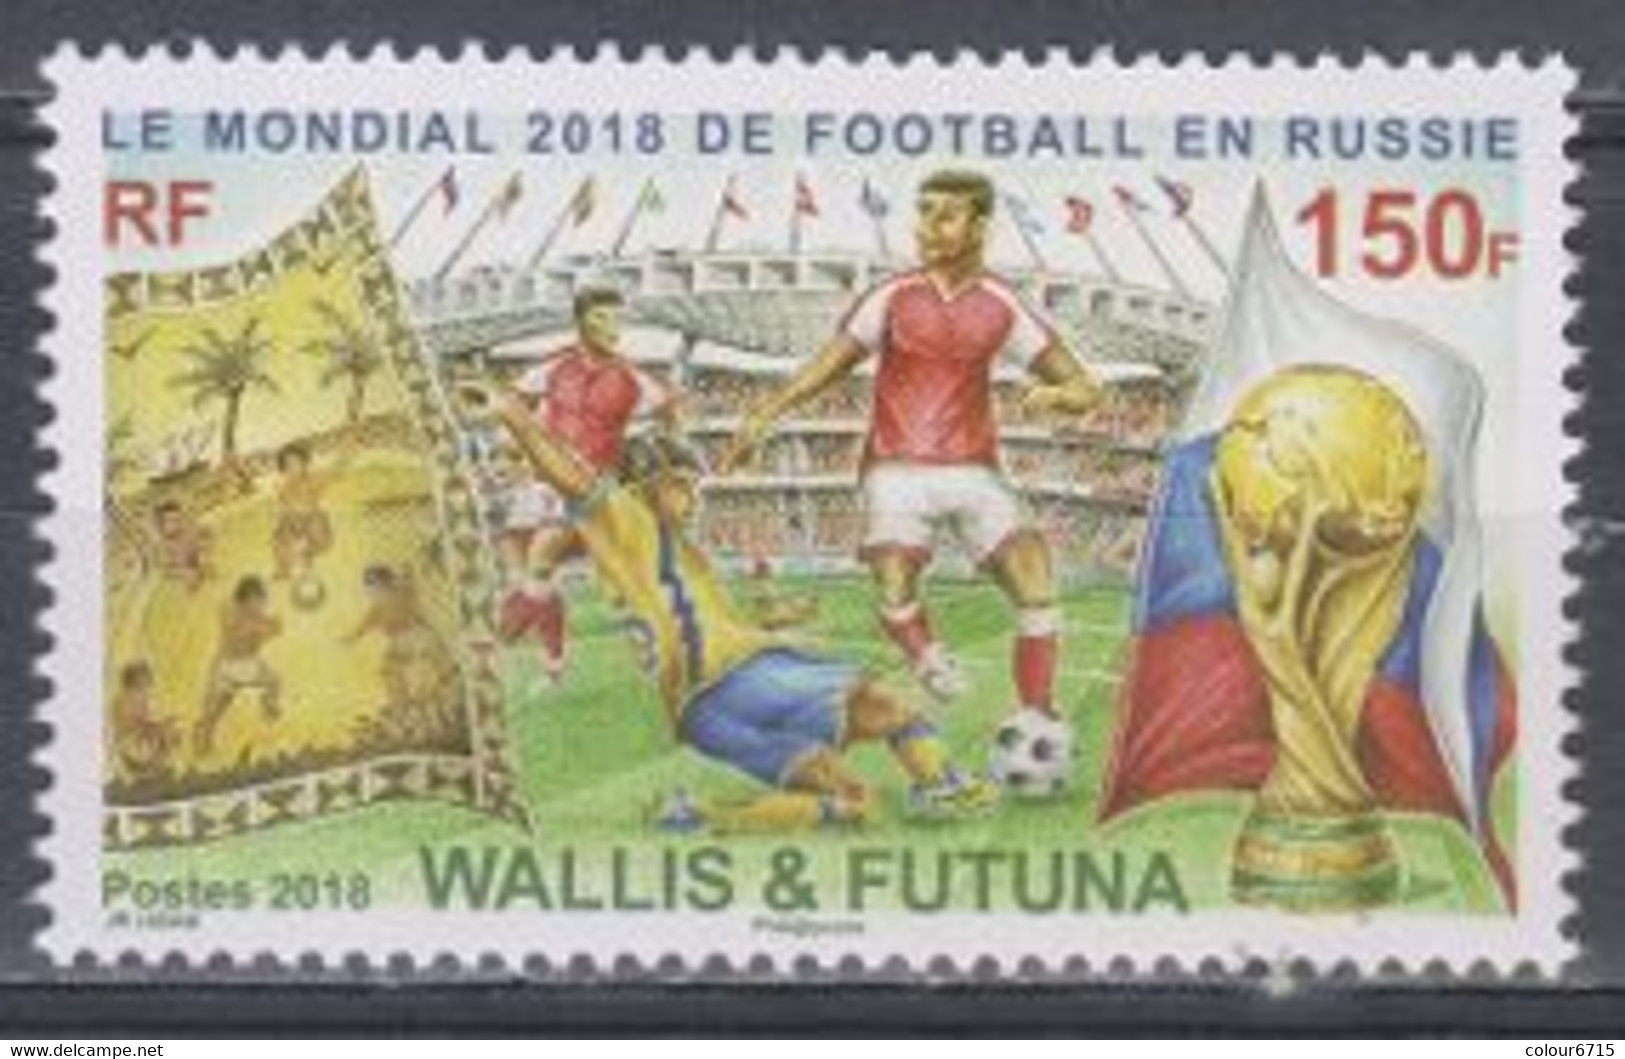 Wallis And Futuna 2018 Football - FIFA World Cup, Russia Stamp 1v MNH - Nuevos